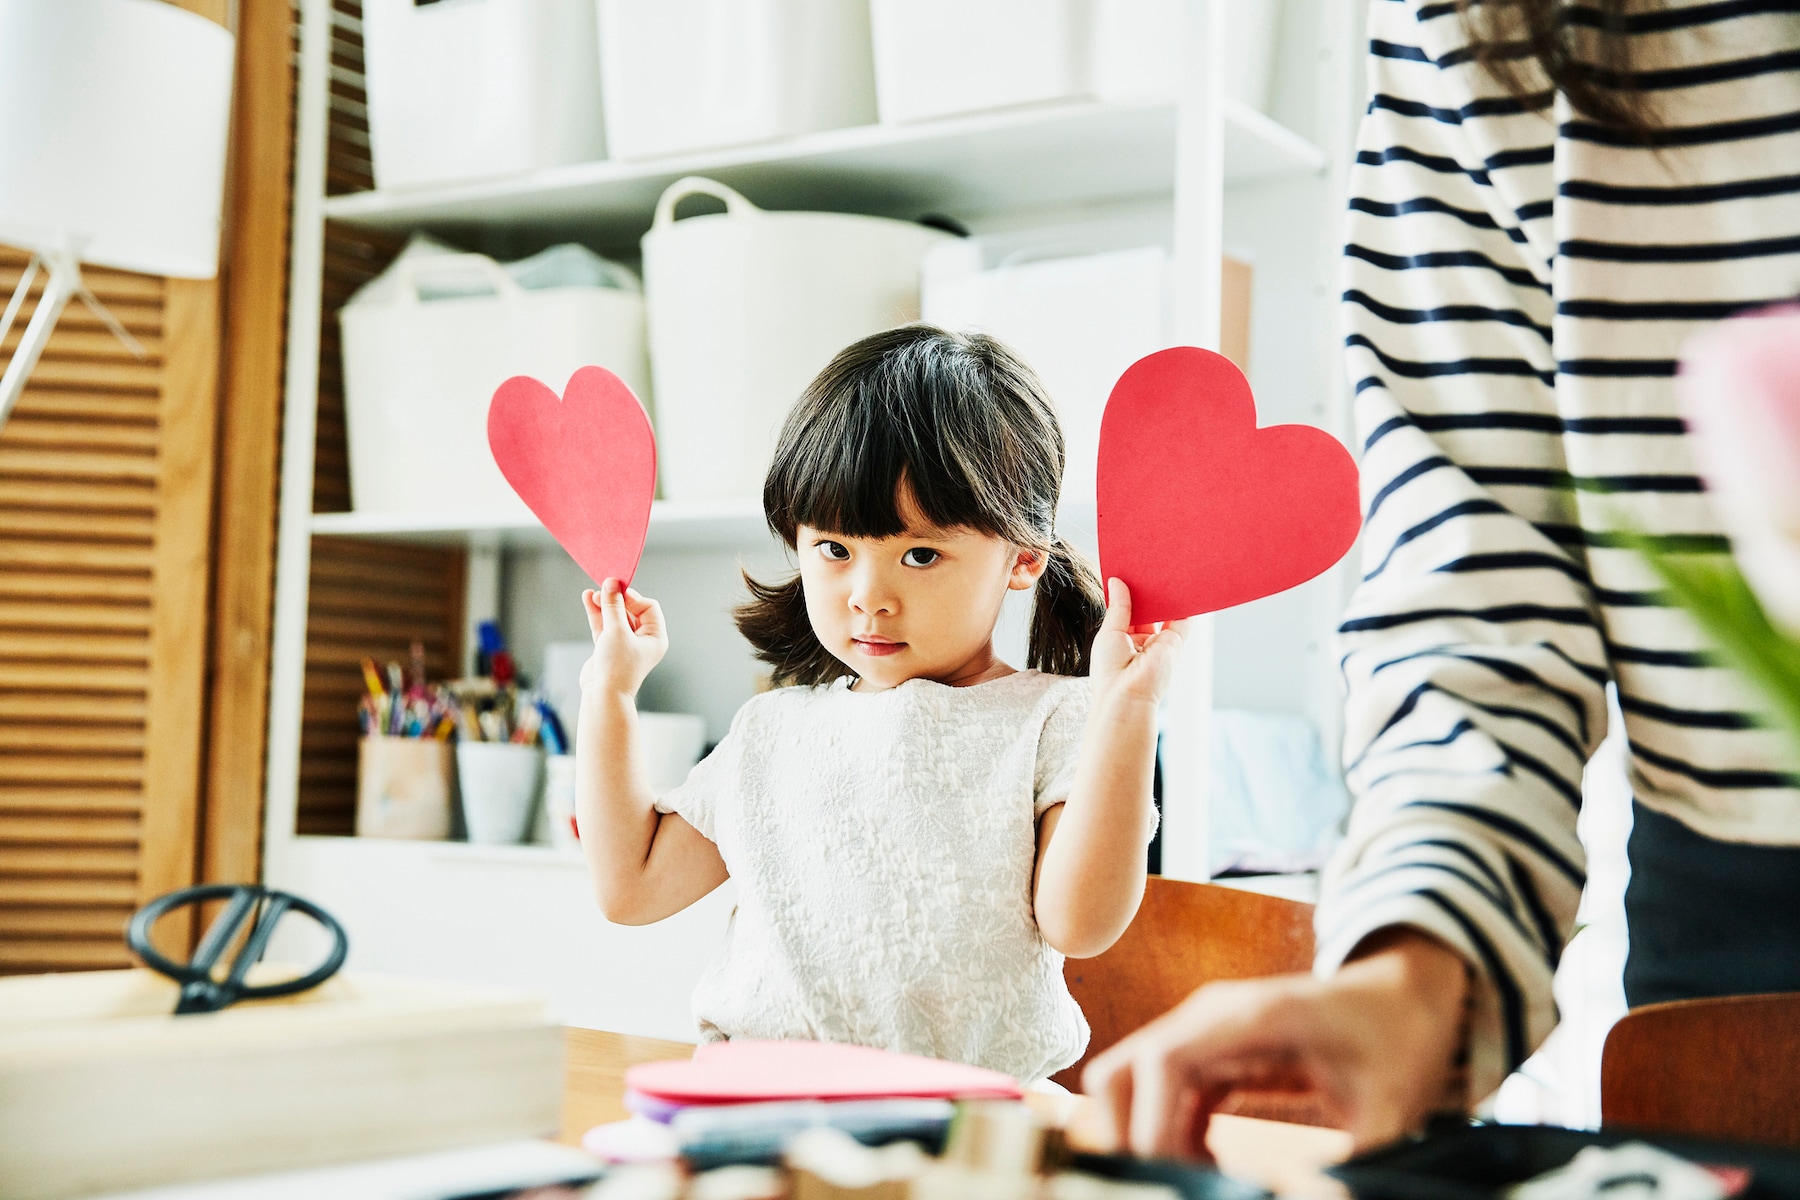 6 DIY Valentine’s Day gifts kids can make